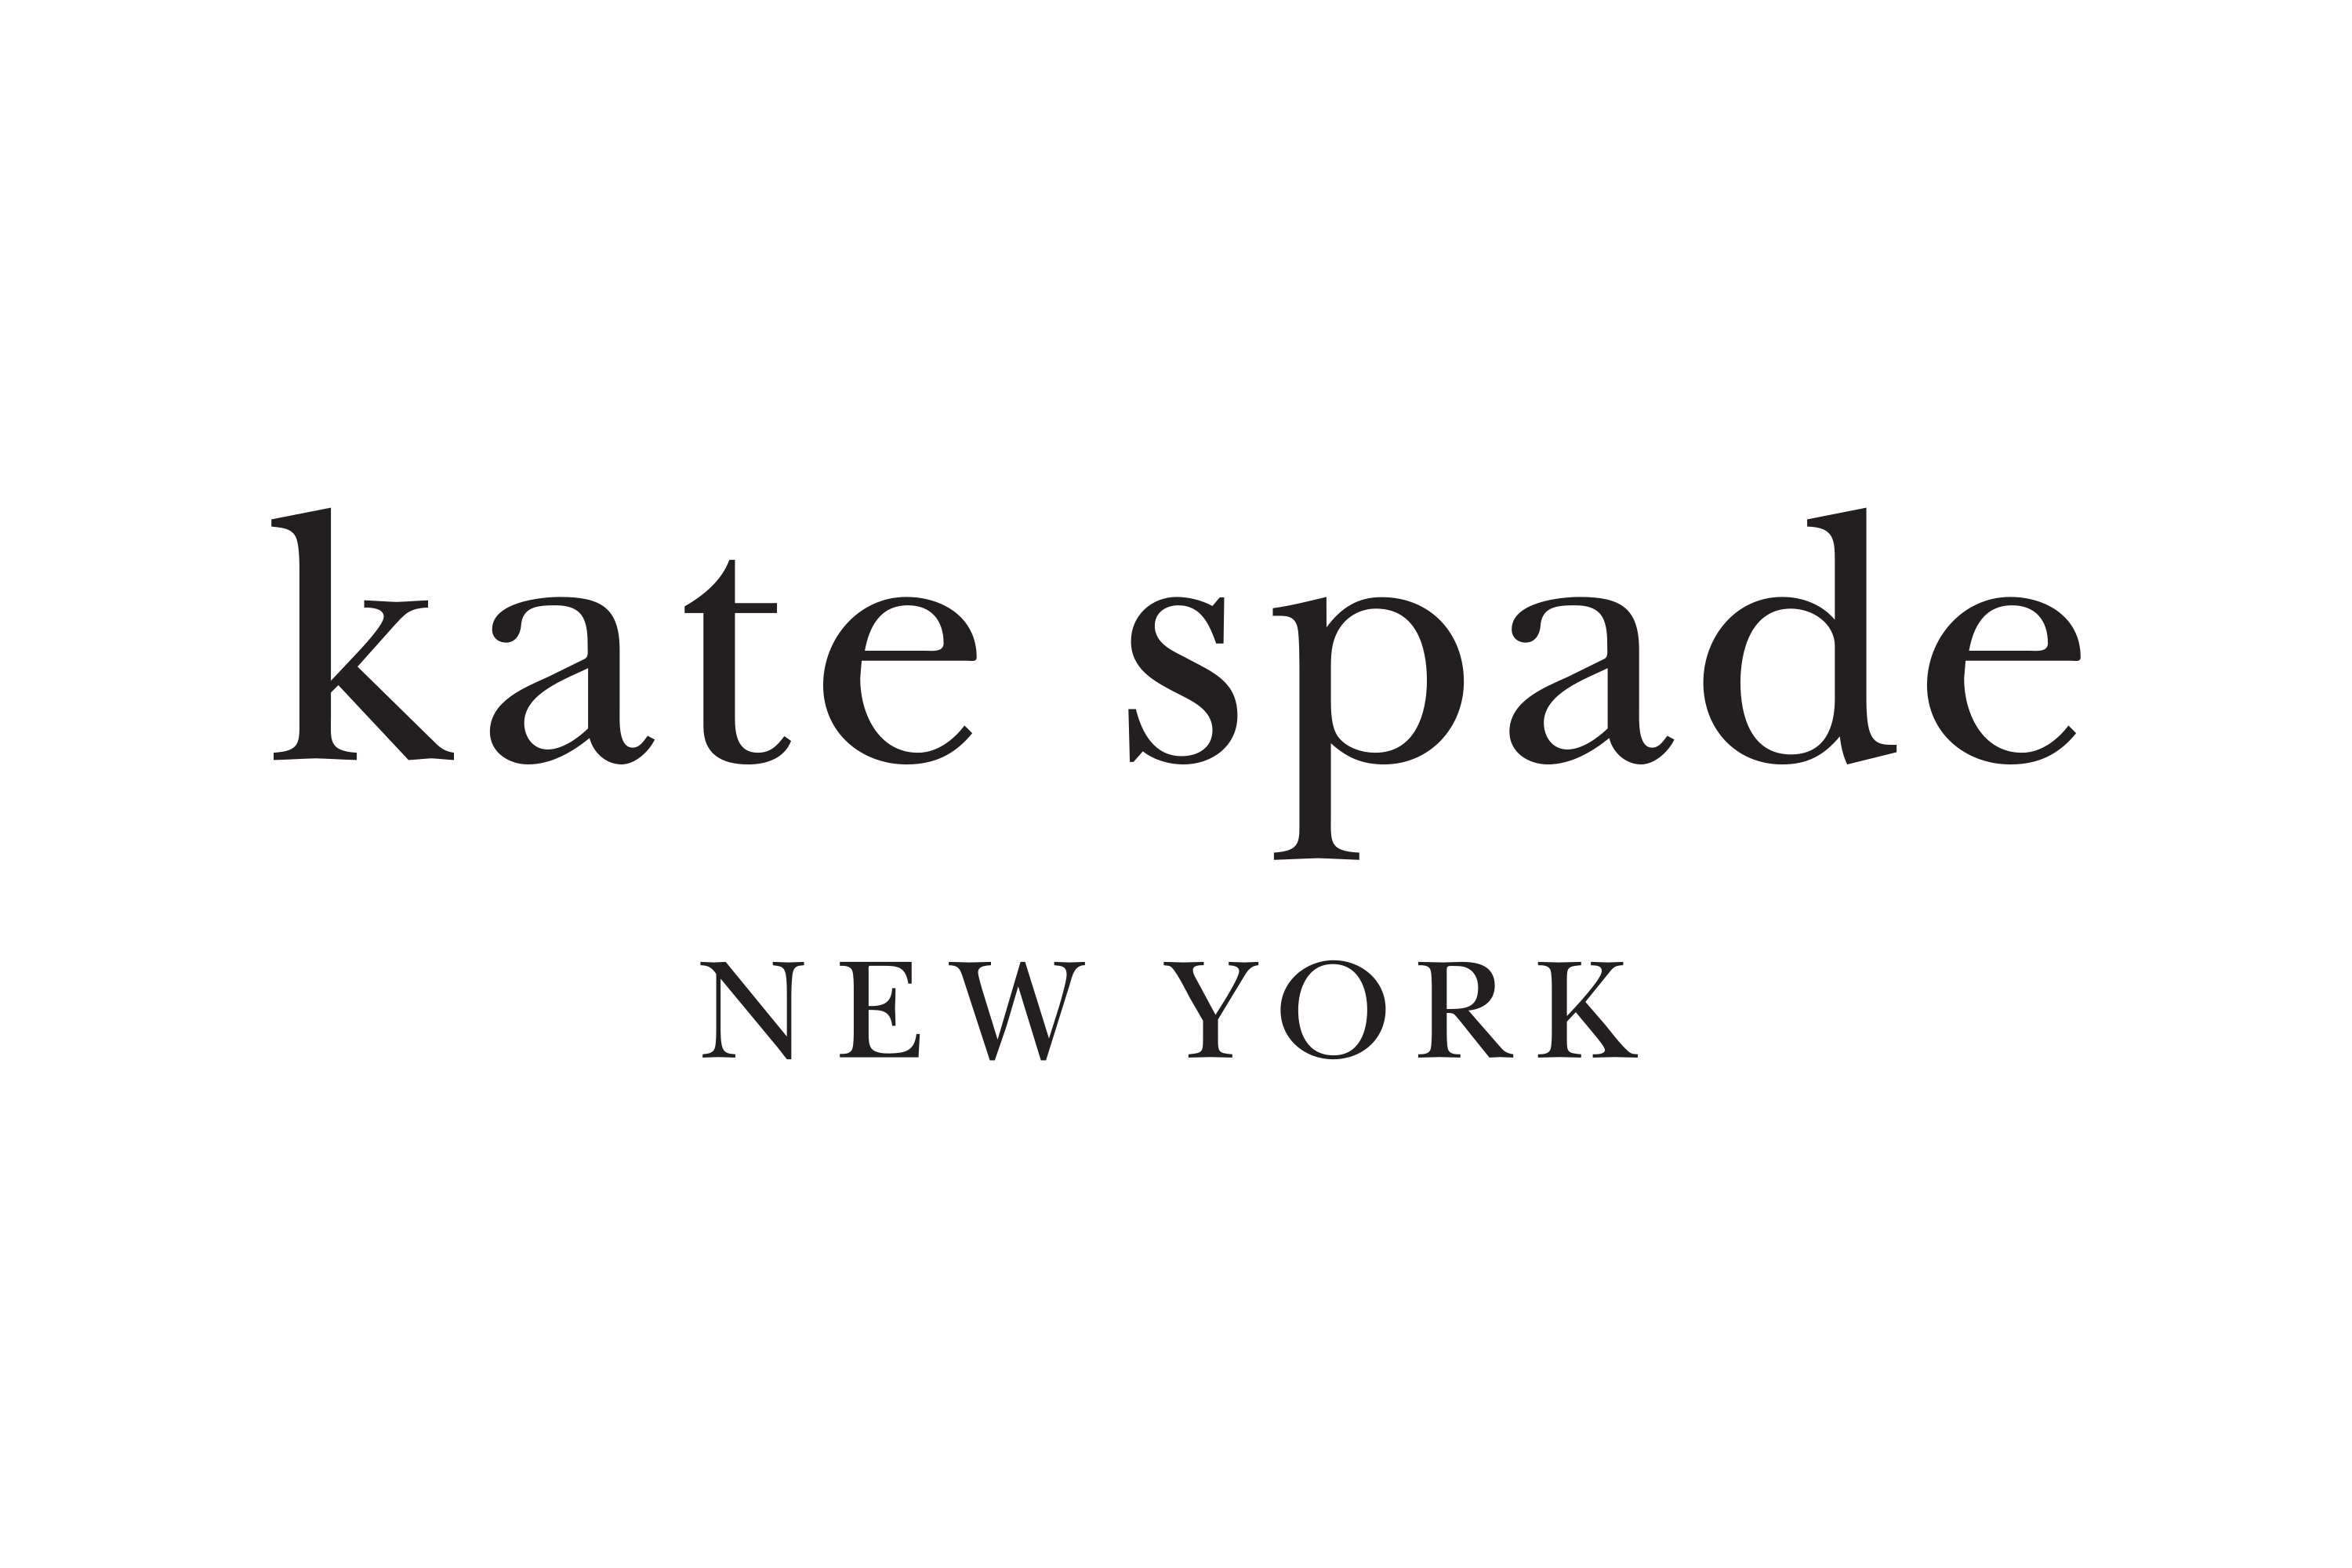 Kate Spade New York Logo